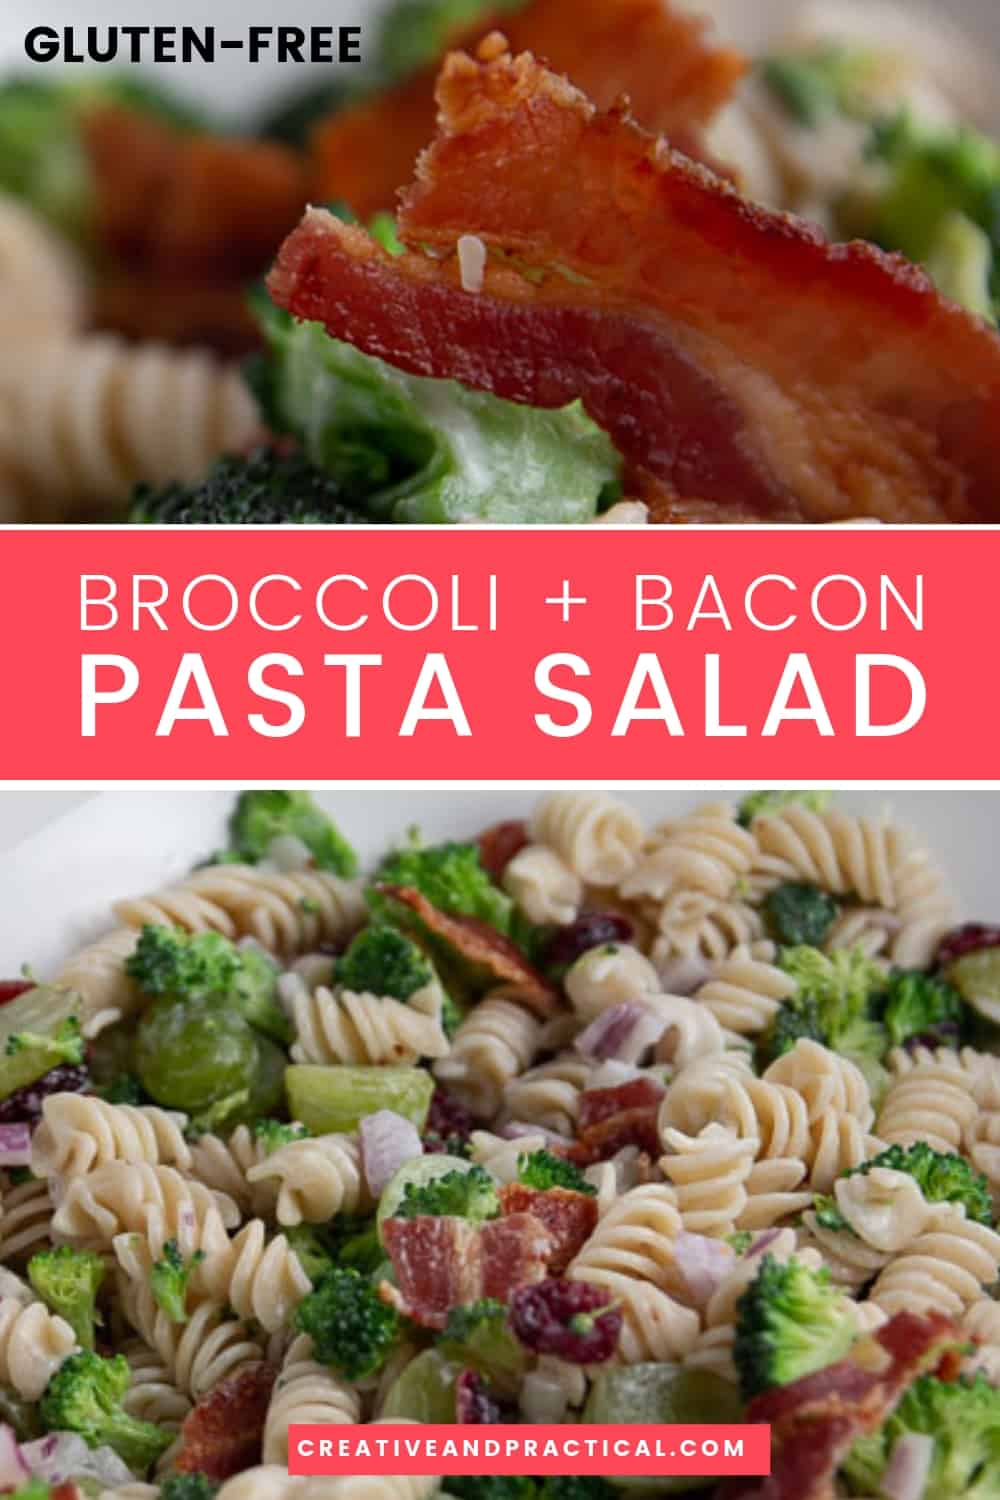 A bowl of Broccoli Pasta Salad